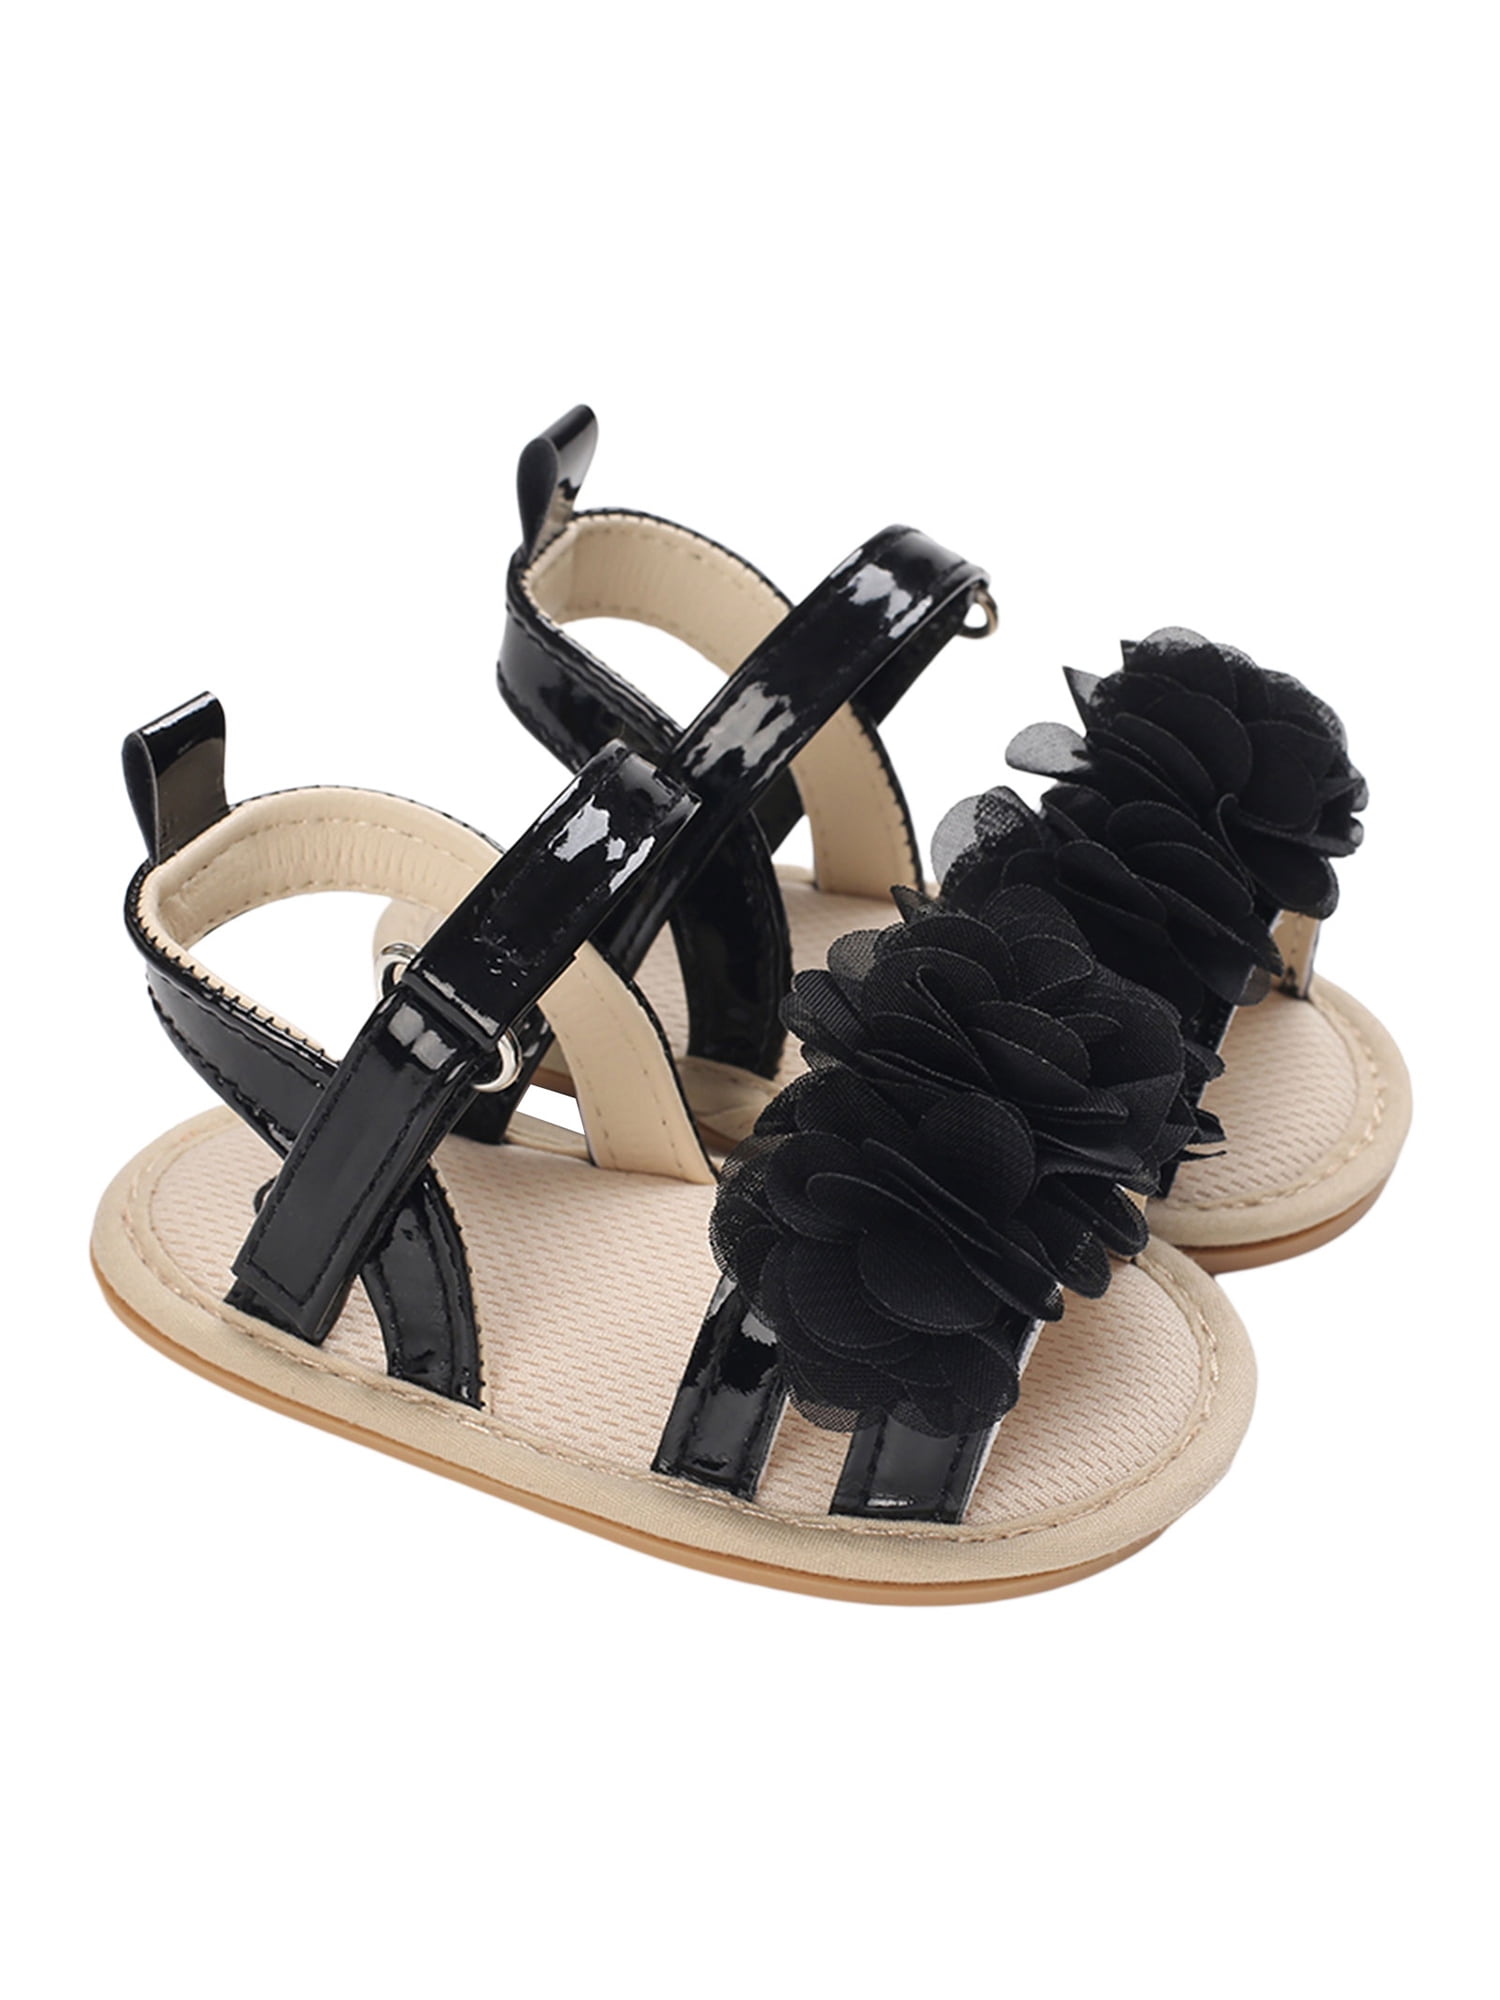 Carter's Boys' Sandals Flat, Navy, Cork Sole, 3-6 Months, Size 2 Regular US  Infant : Amazon.in: Shoes & Handbags